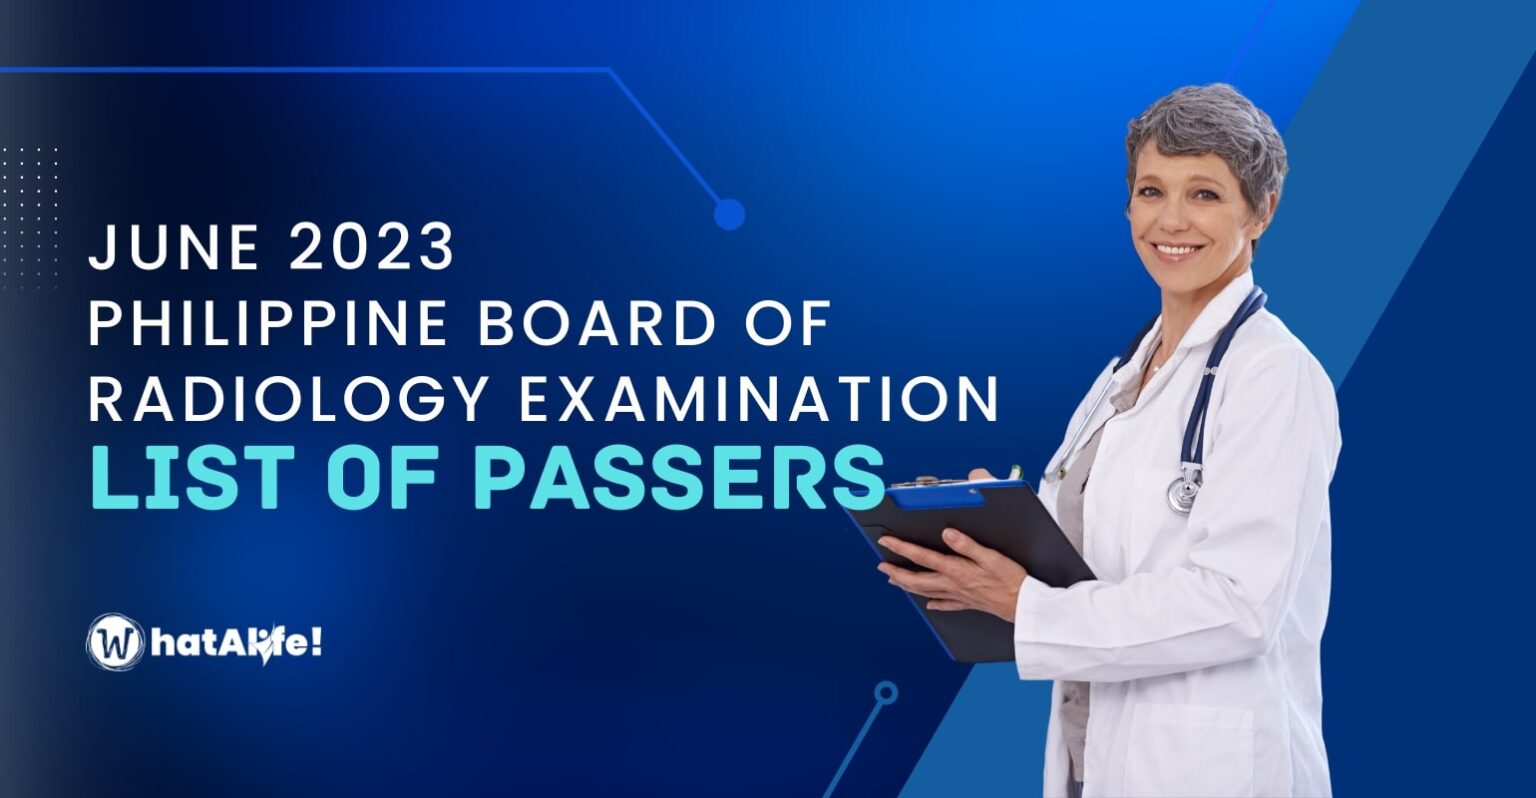 Full List of Passers — June 2023 Philippine Board of Radiology Exam